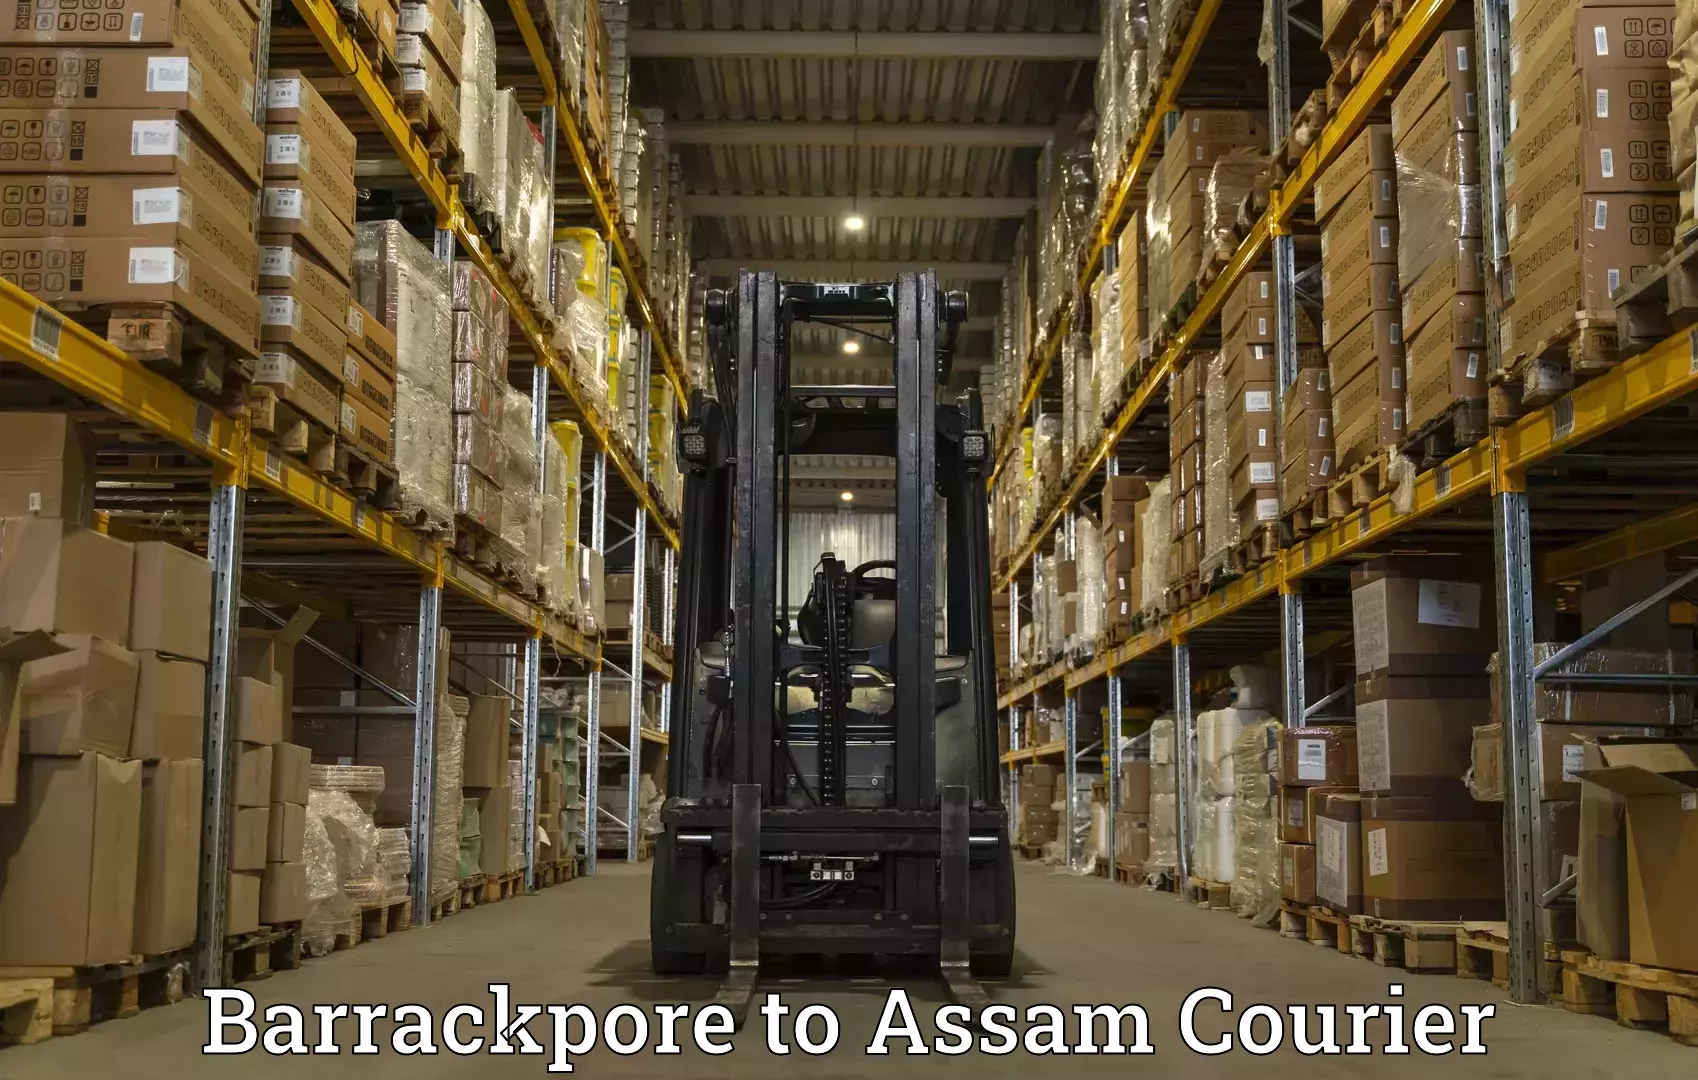 Global logistics network Barrackpore to Assam